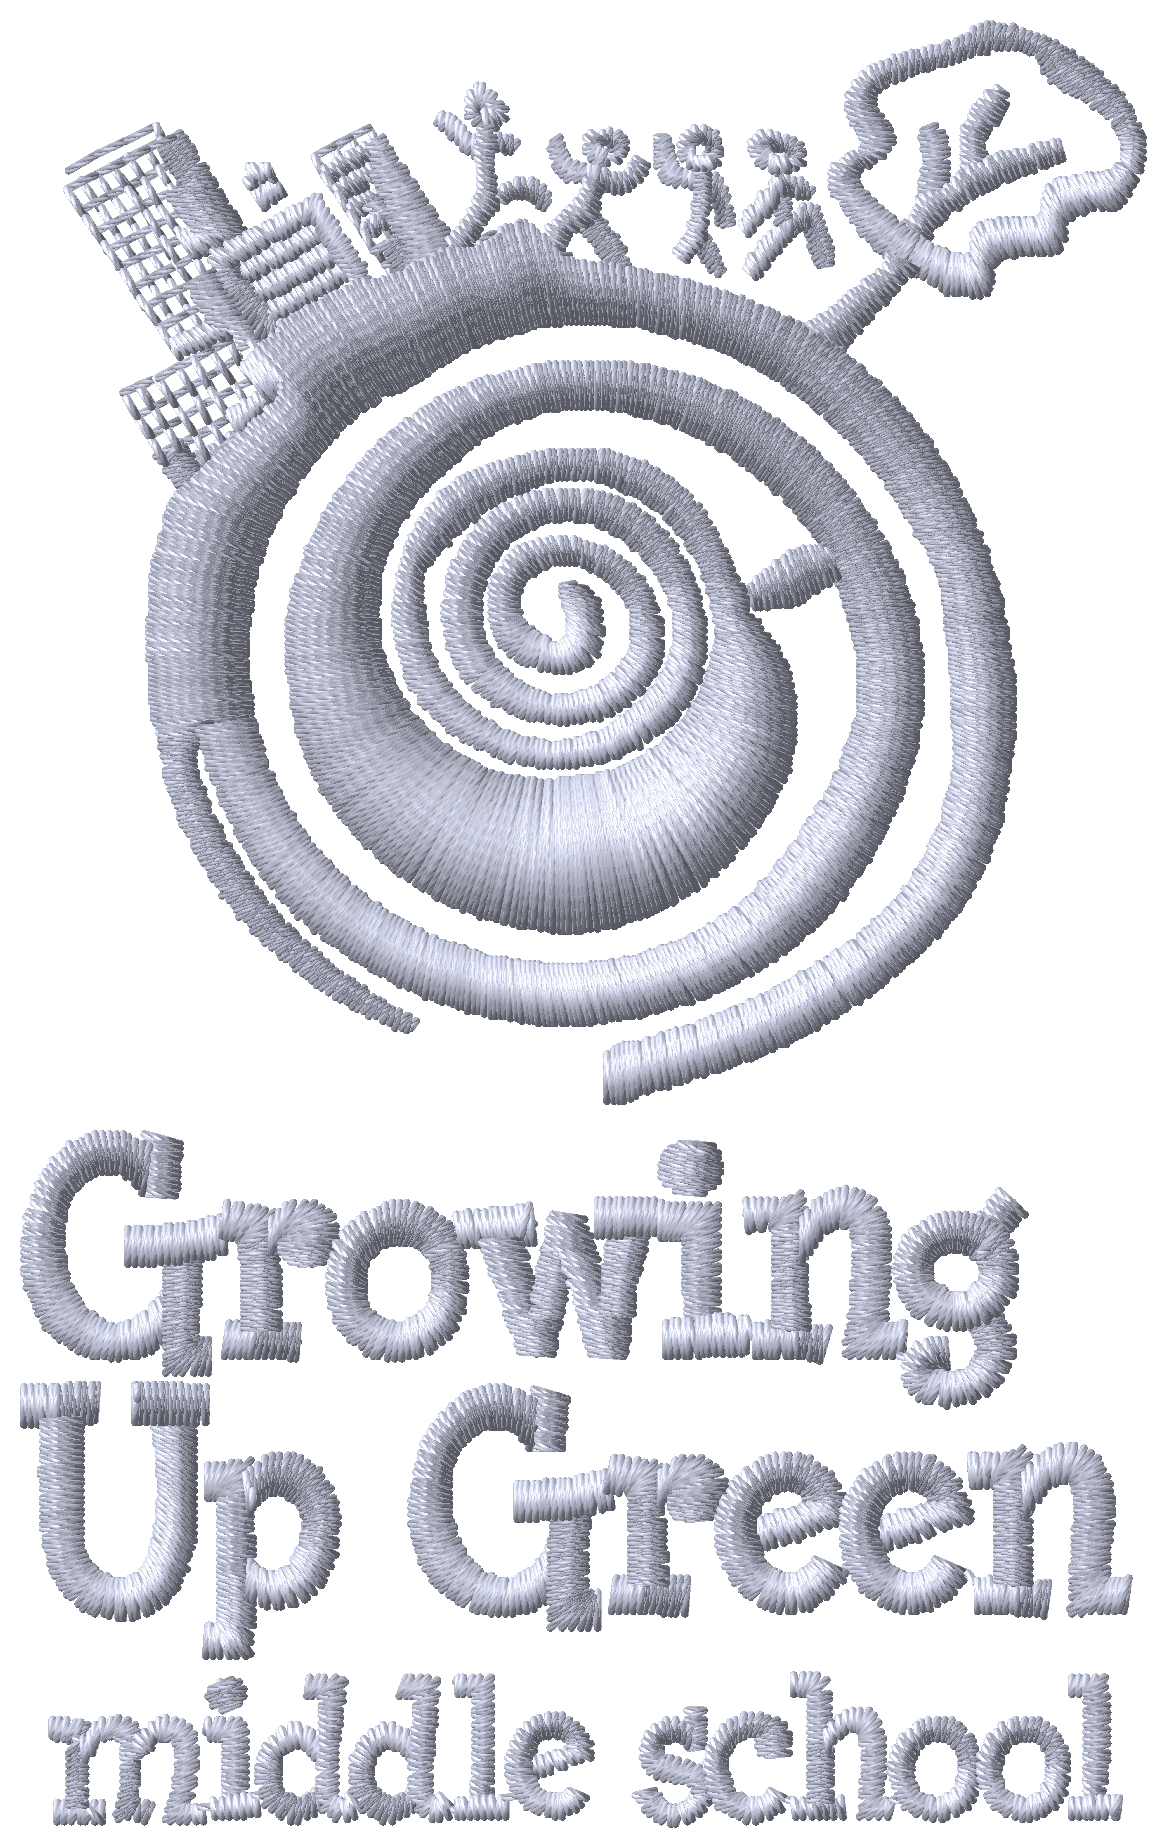 Growing Up Green Charter School